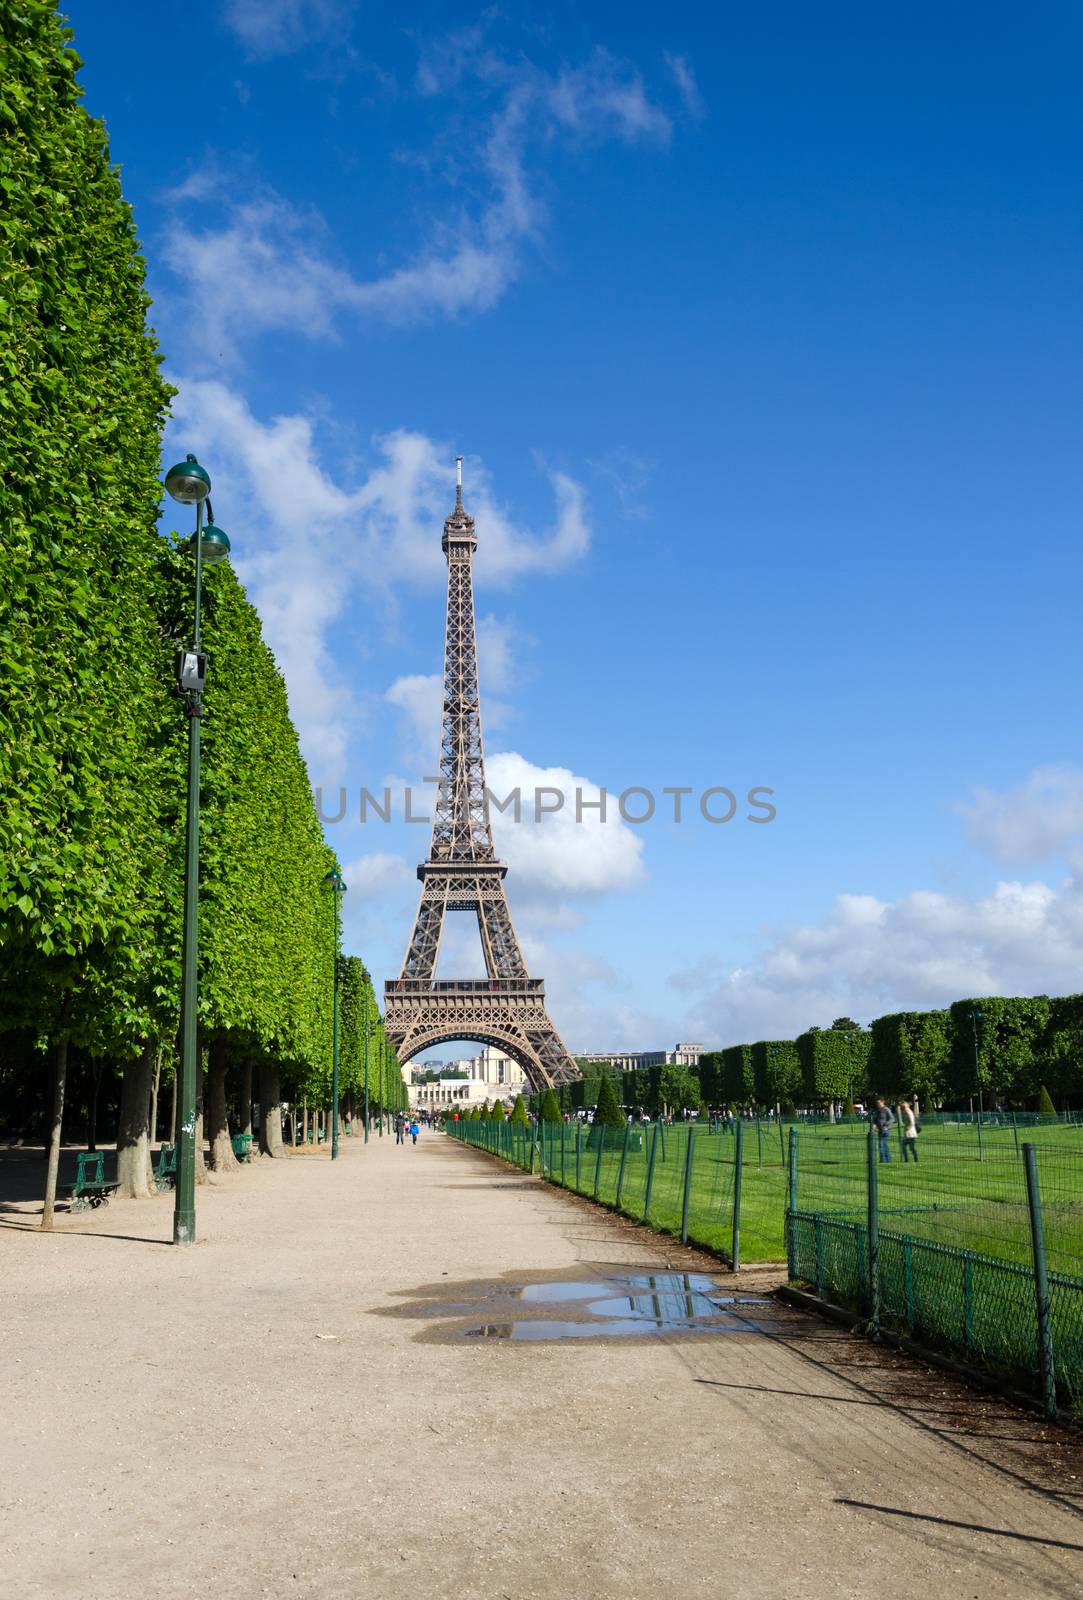 Eiffel Tower, Landmark in Paris, France.